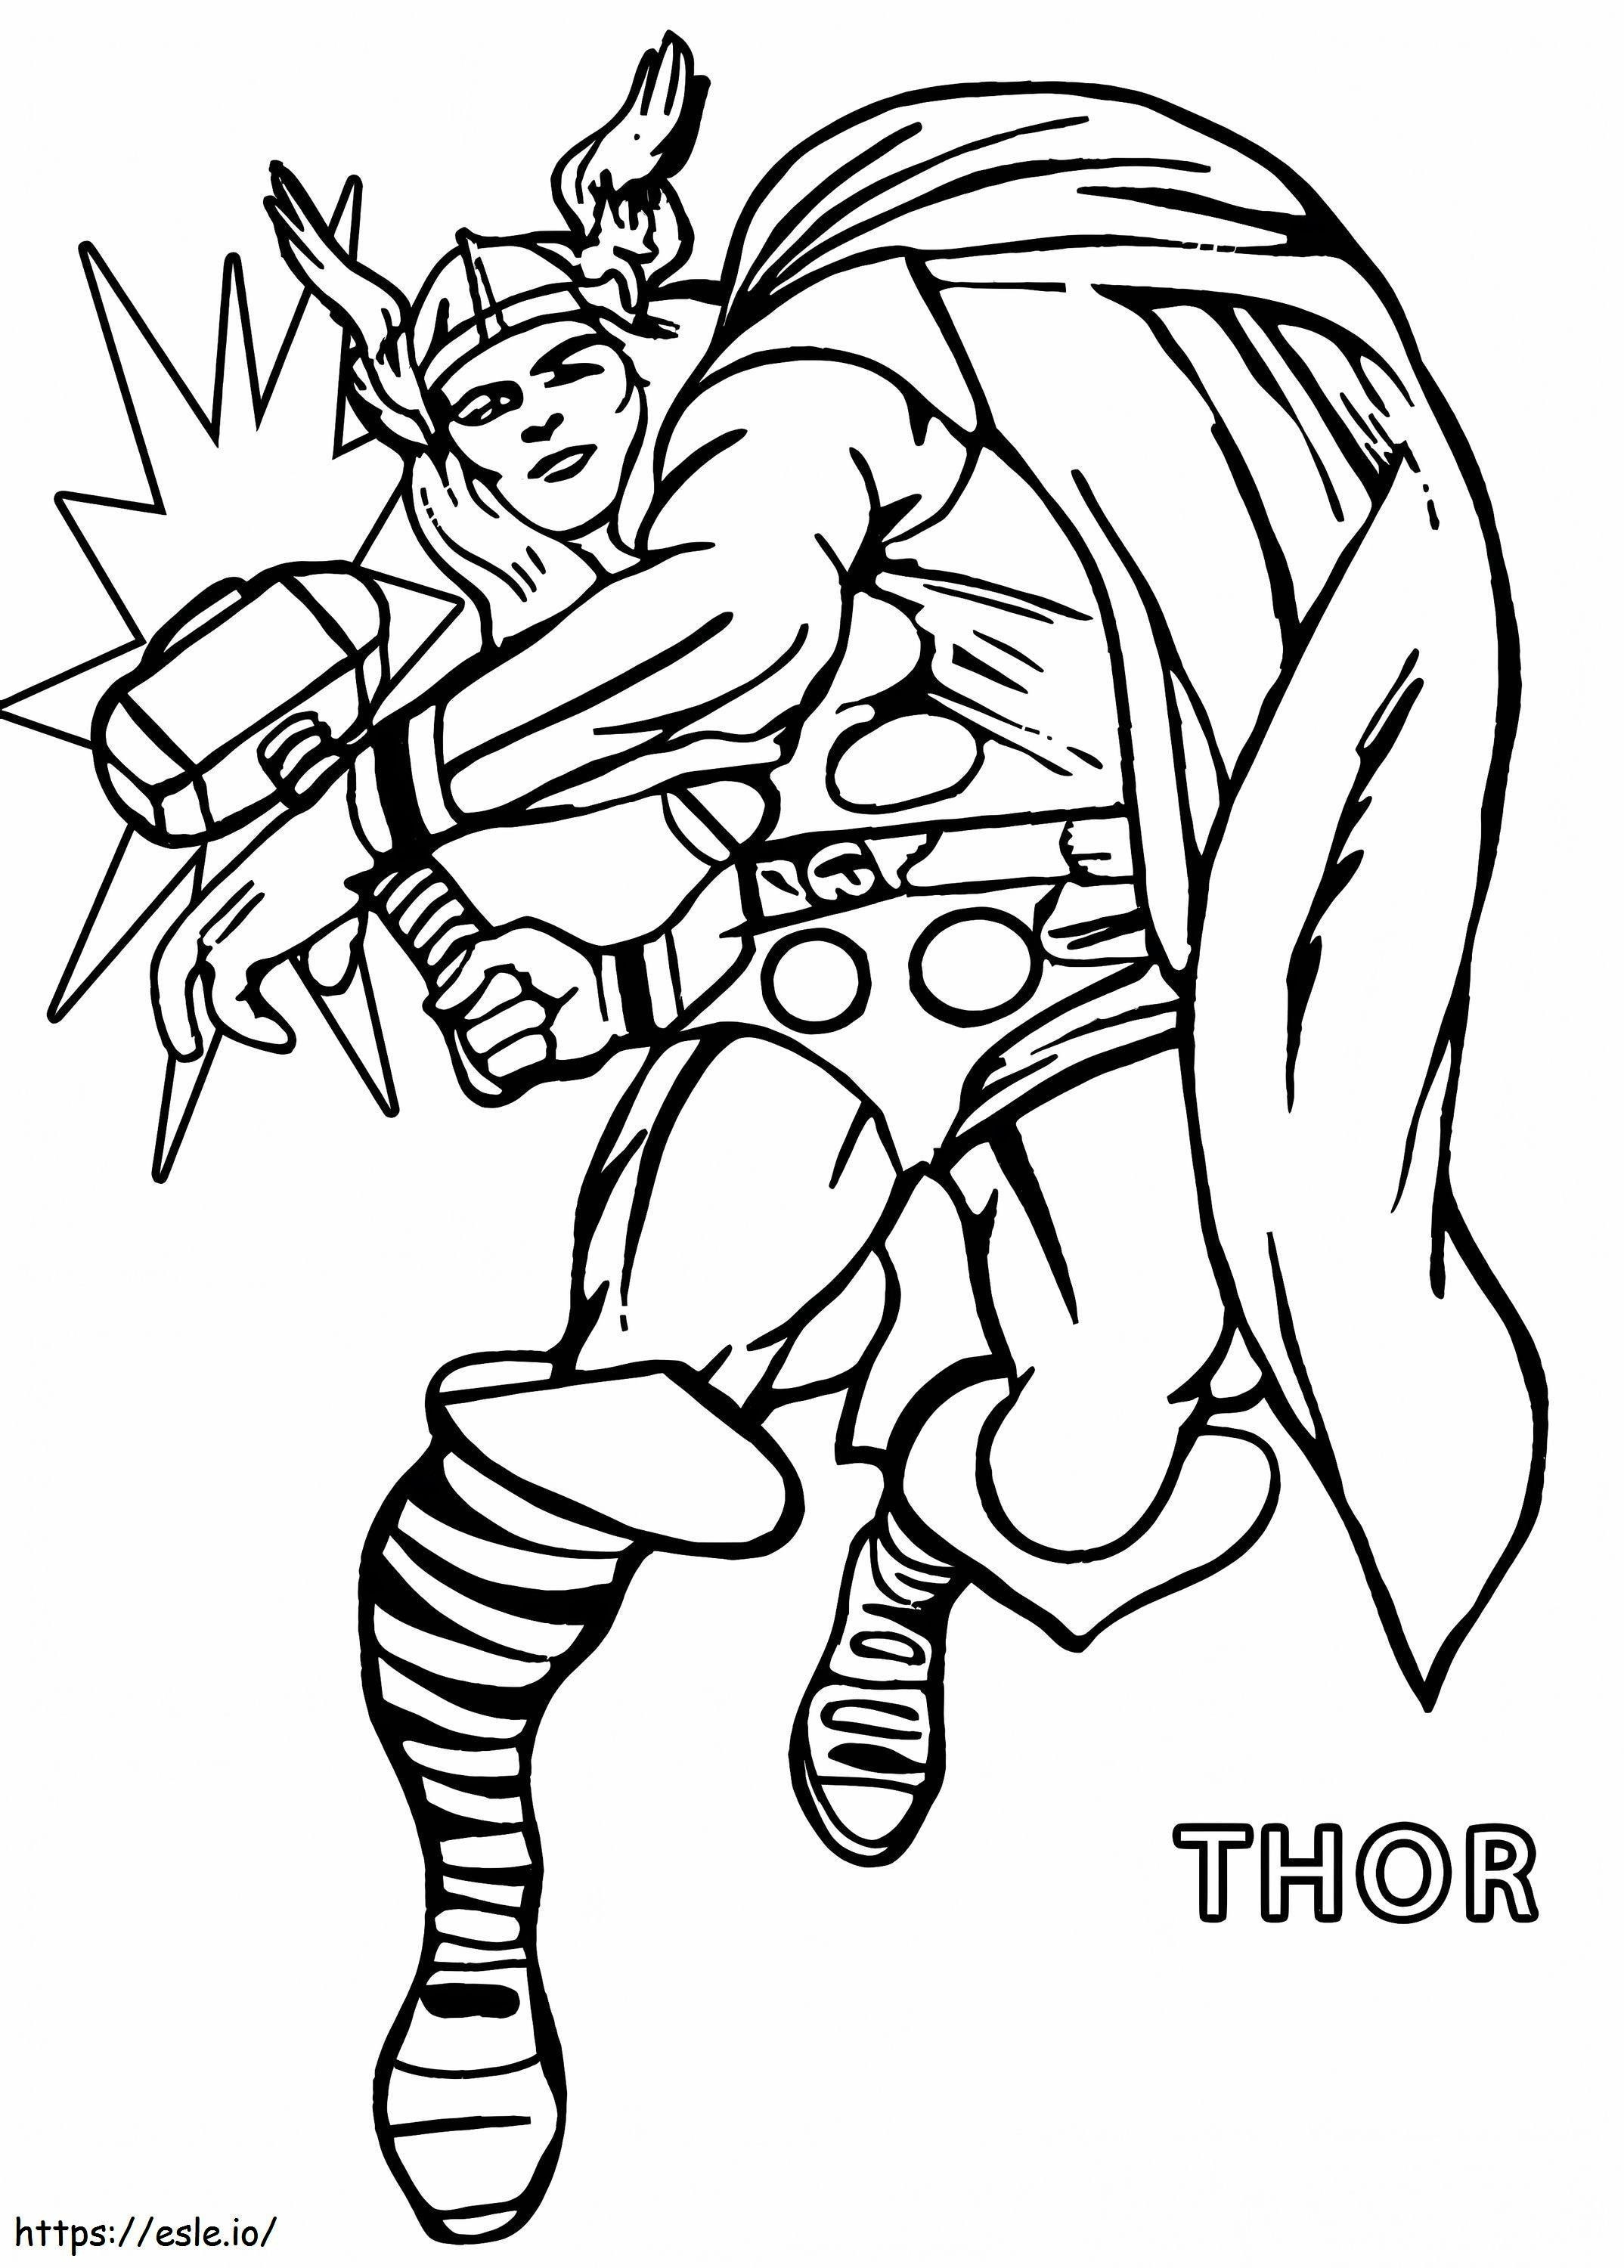 Coloriage Thor attaqué à imprimer dessin